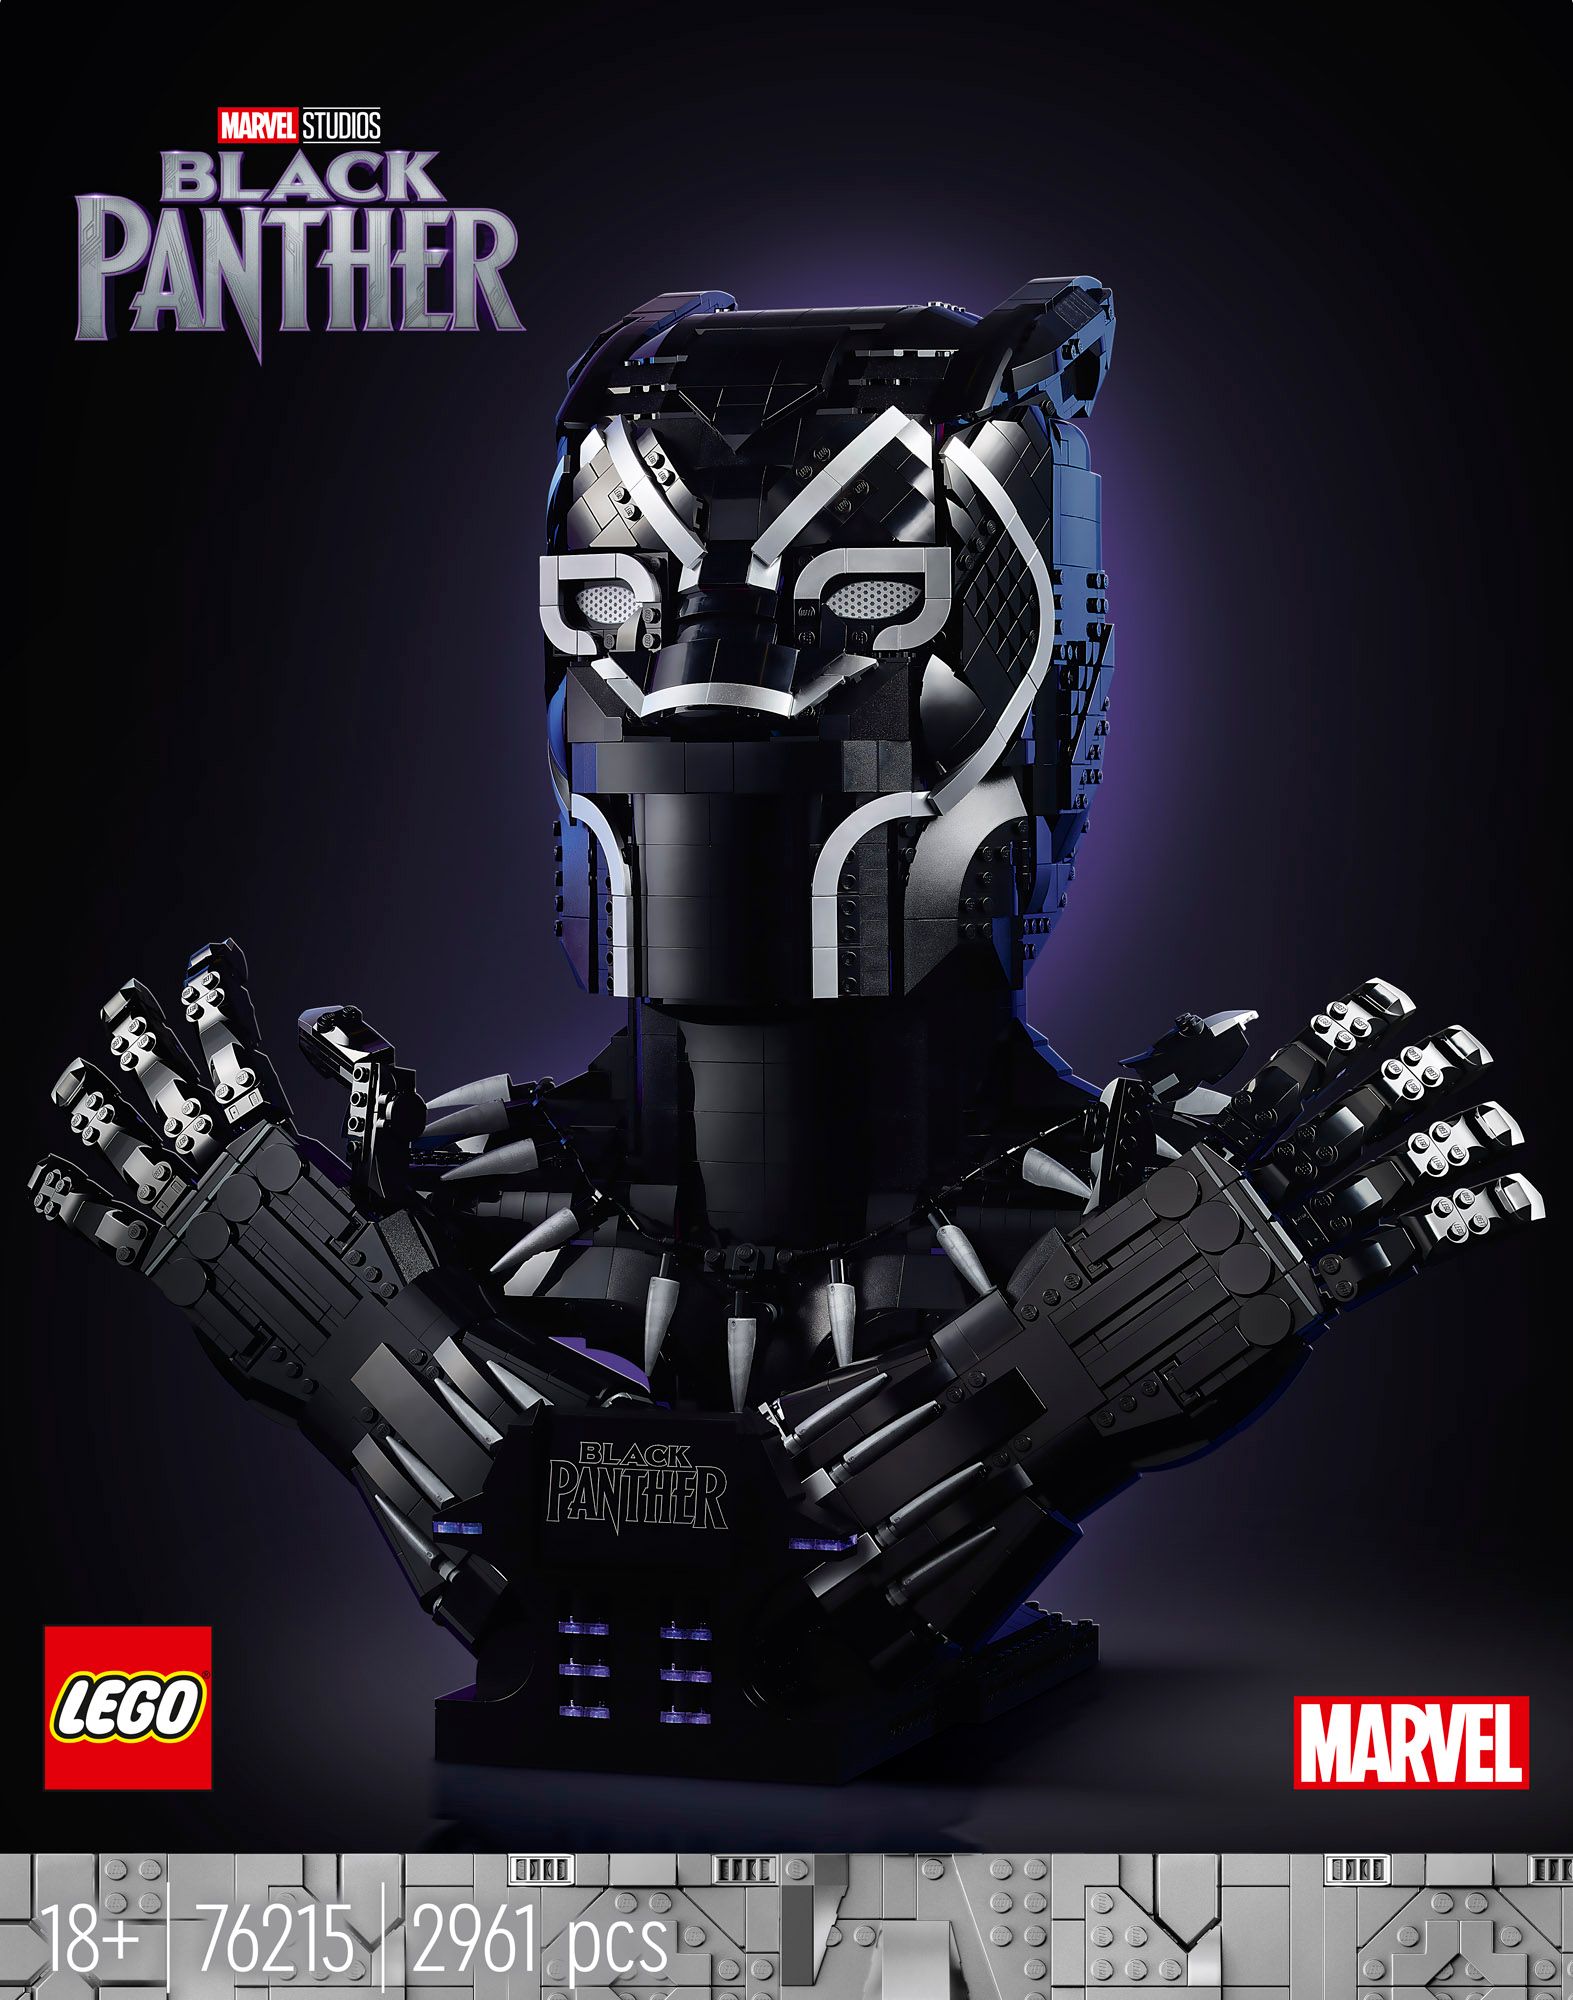 76215 LEGO Marvle Black Panther Bust Box FRONT